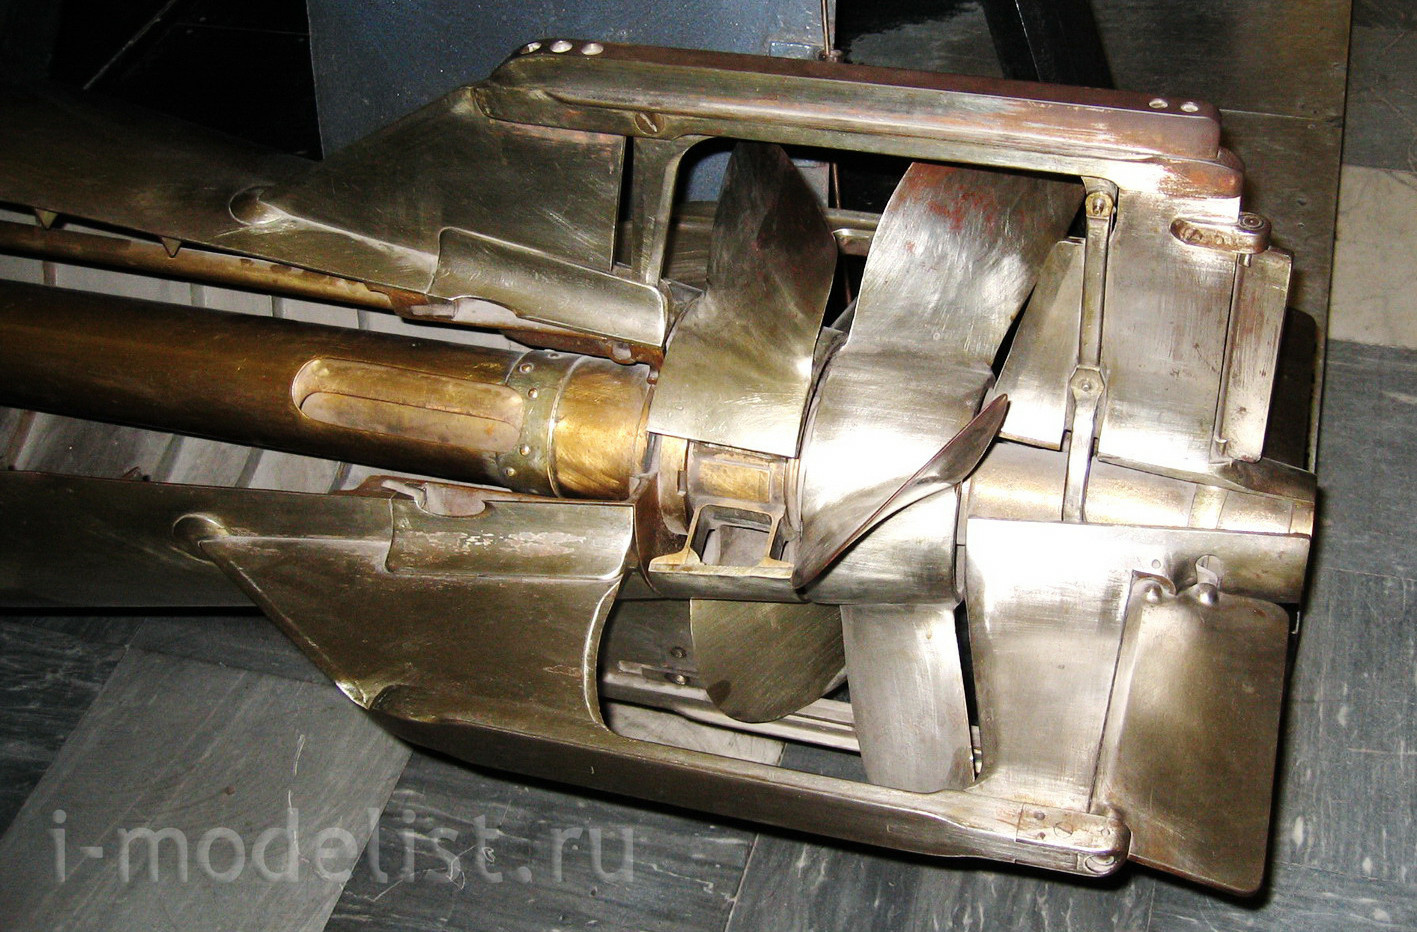 im35019 Imodelist 1/35 Soviet torpedo 53-38, caliber 533, on a trolley